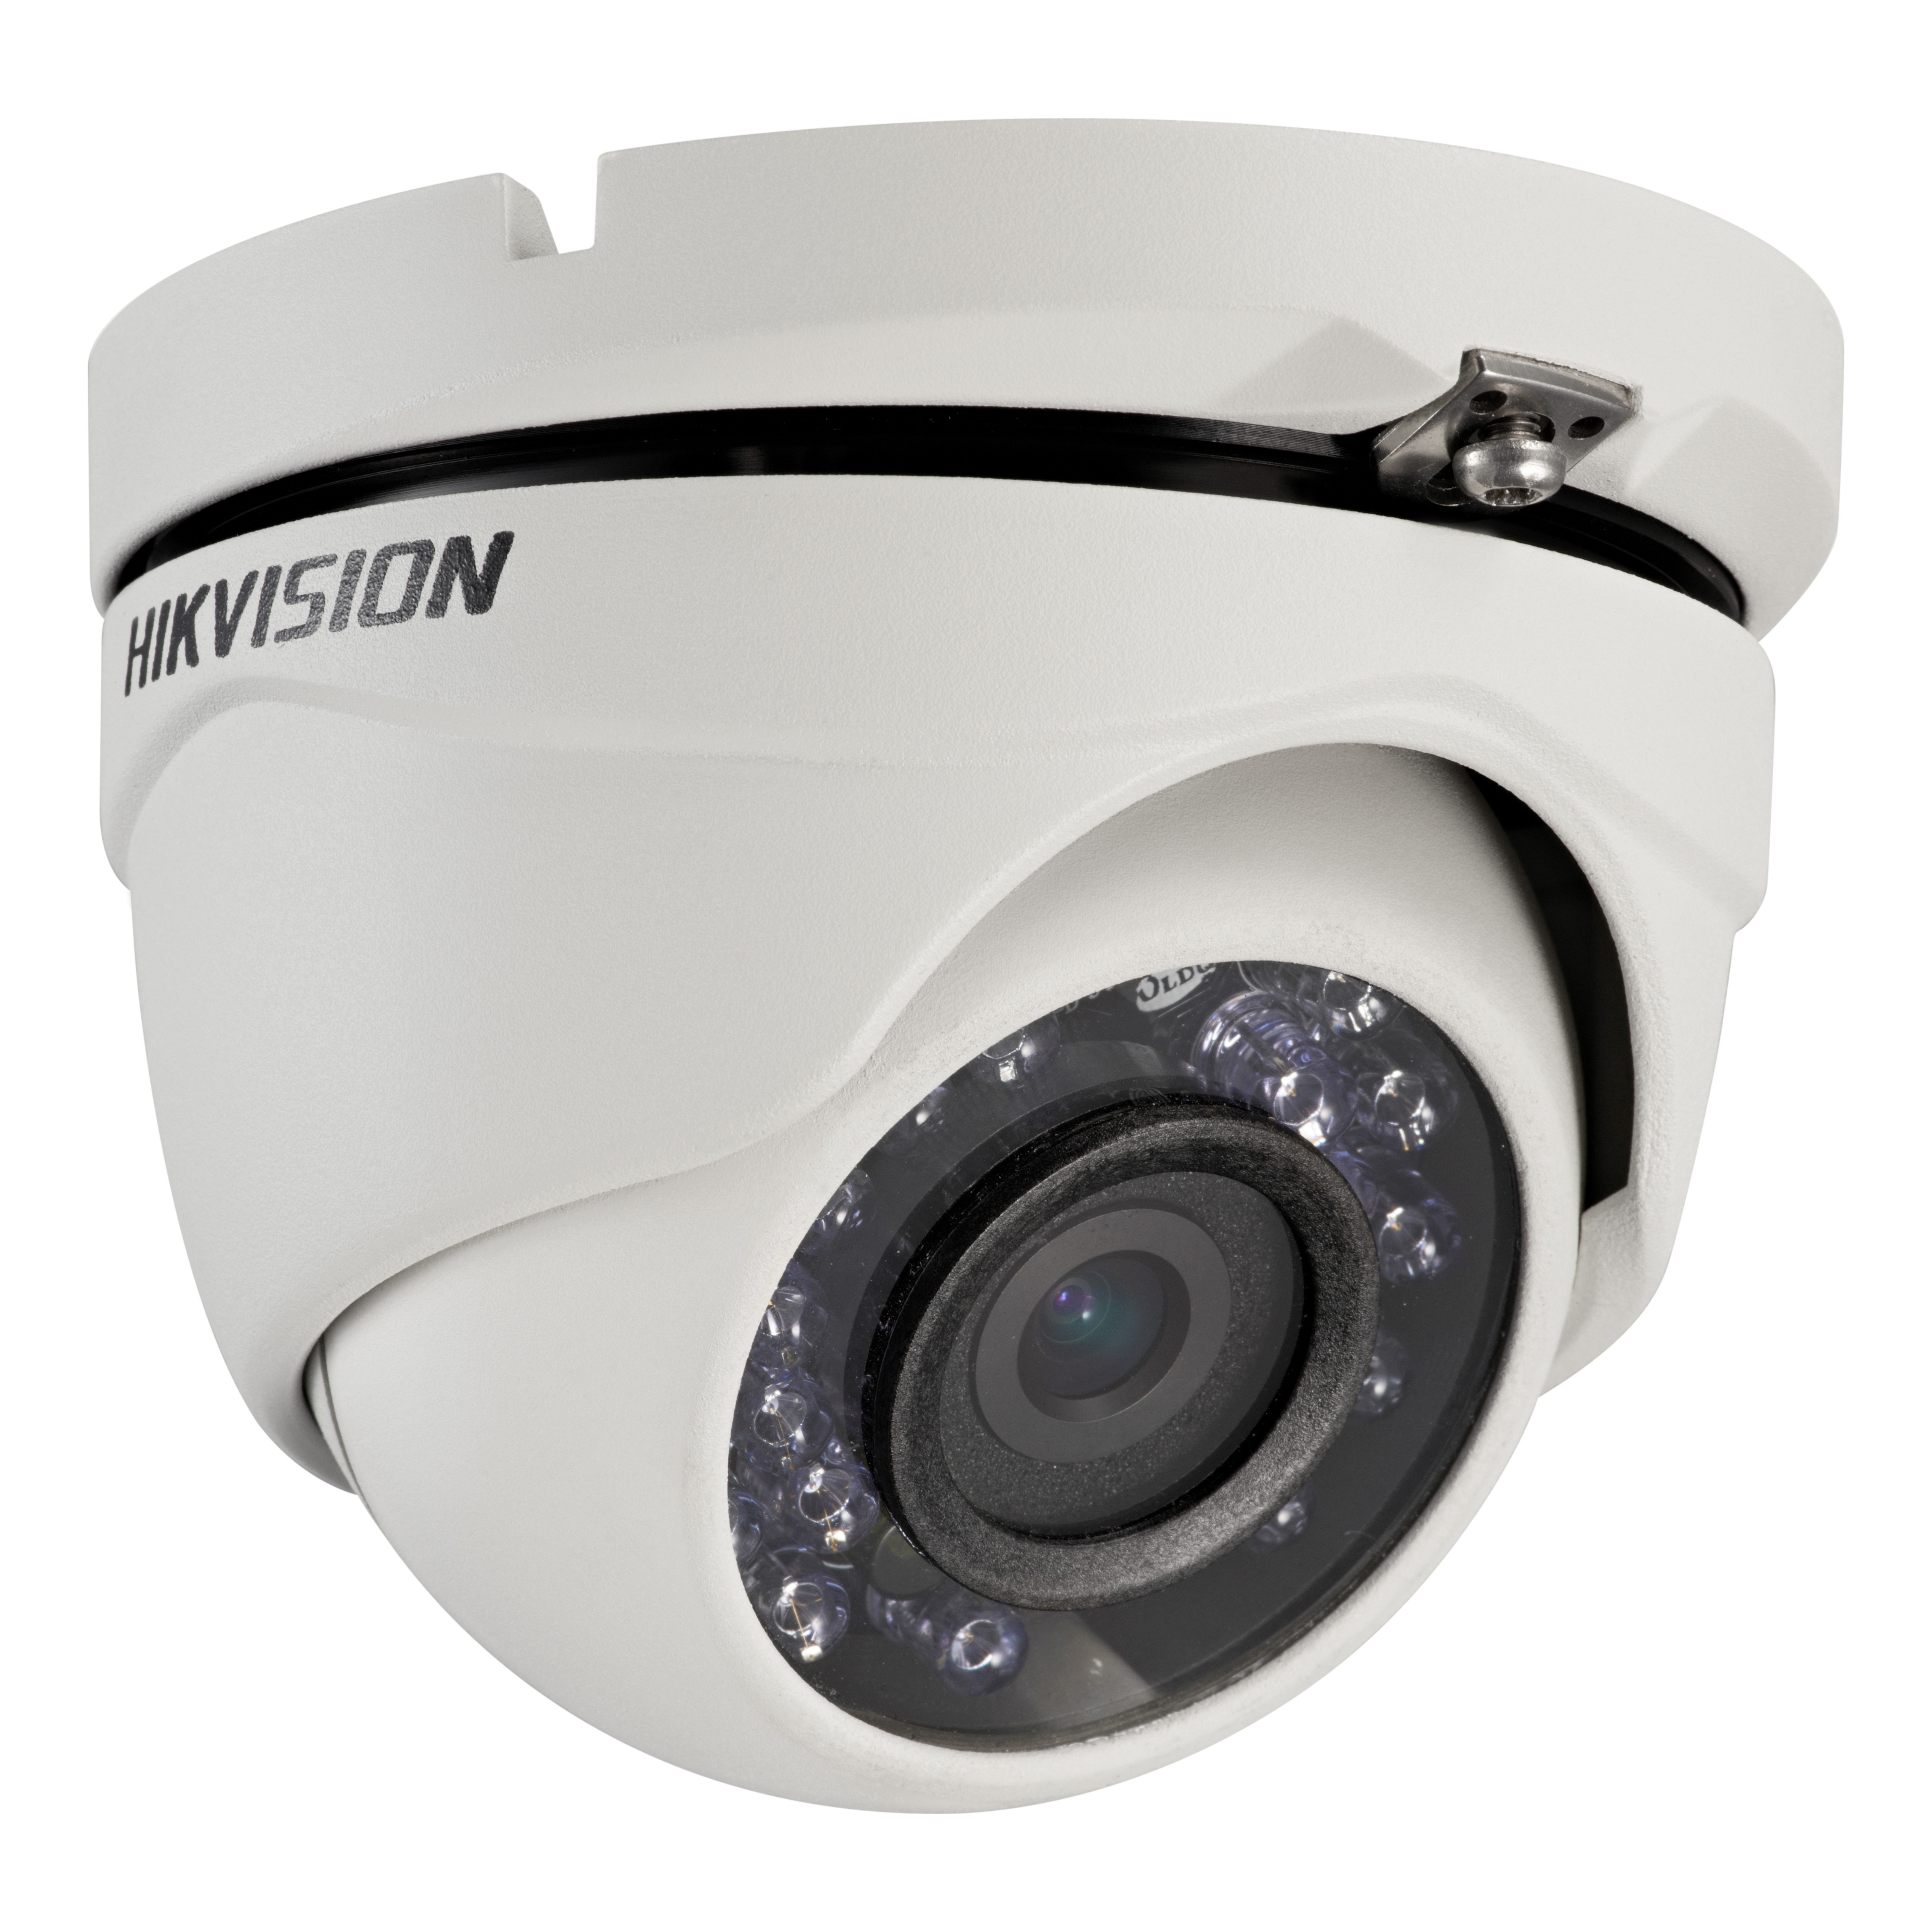 Hikvision DS-2CE56D0T-IRM (2.8 mm) HD видеокамера